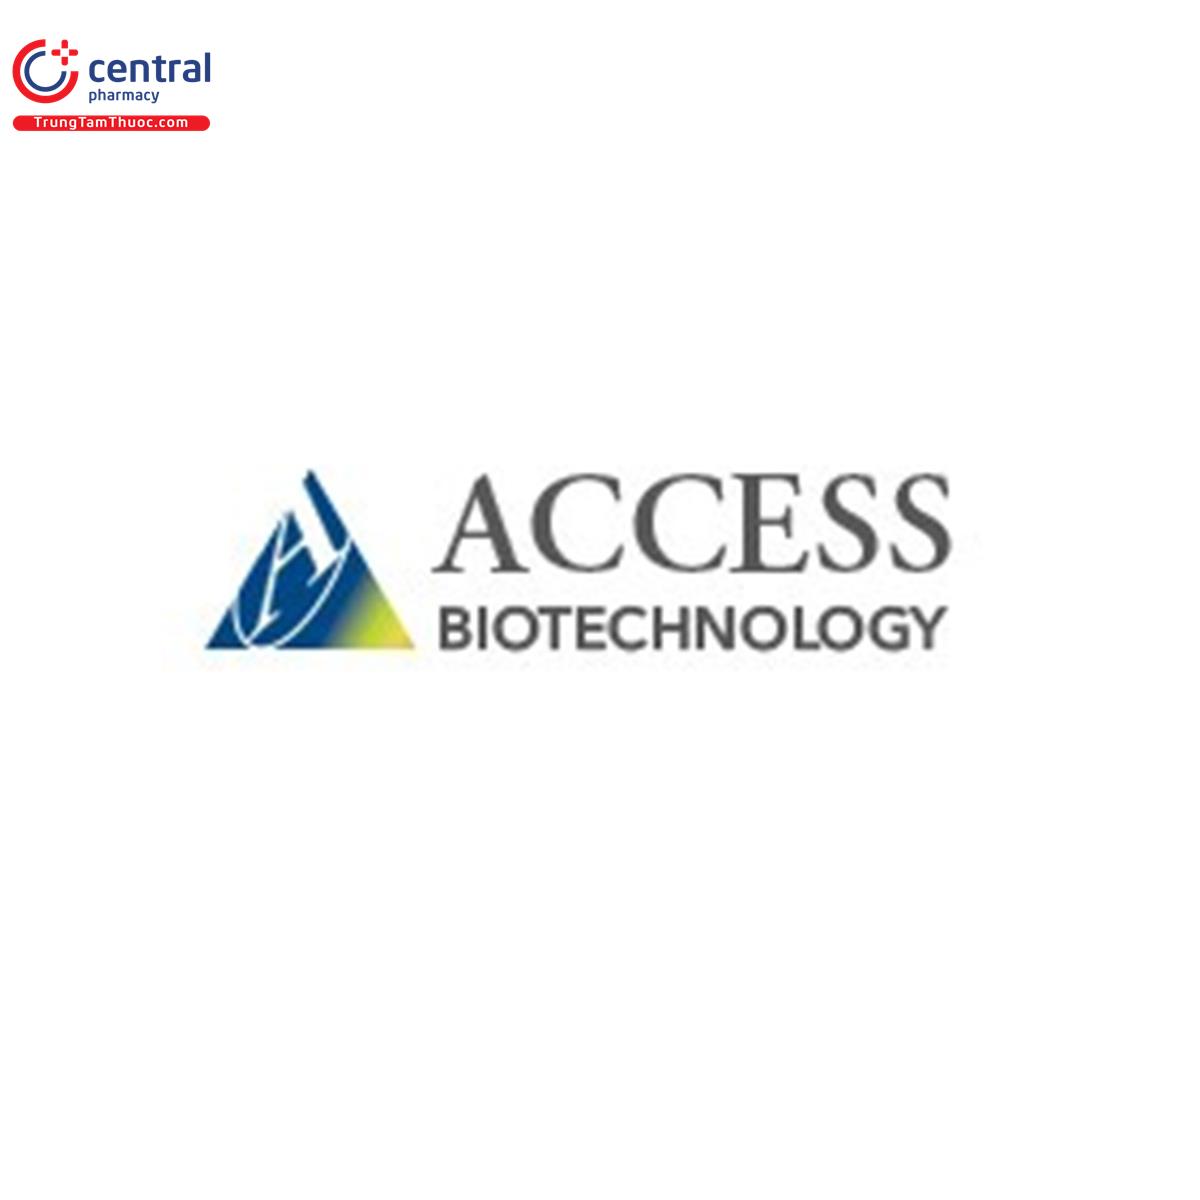 Access Biotechnology